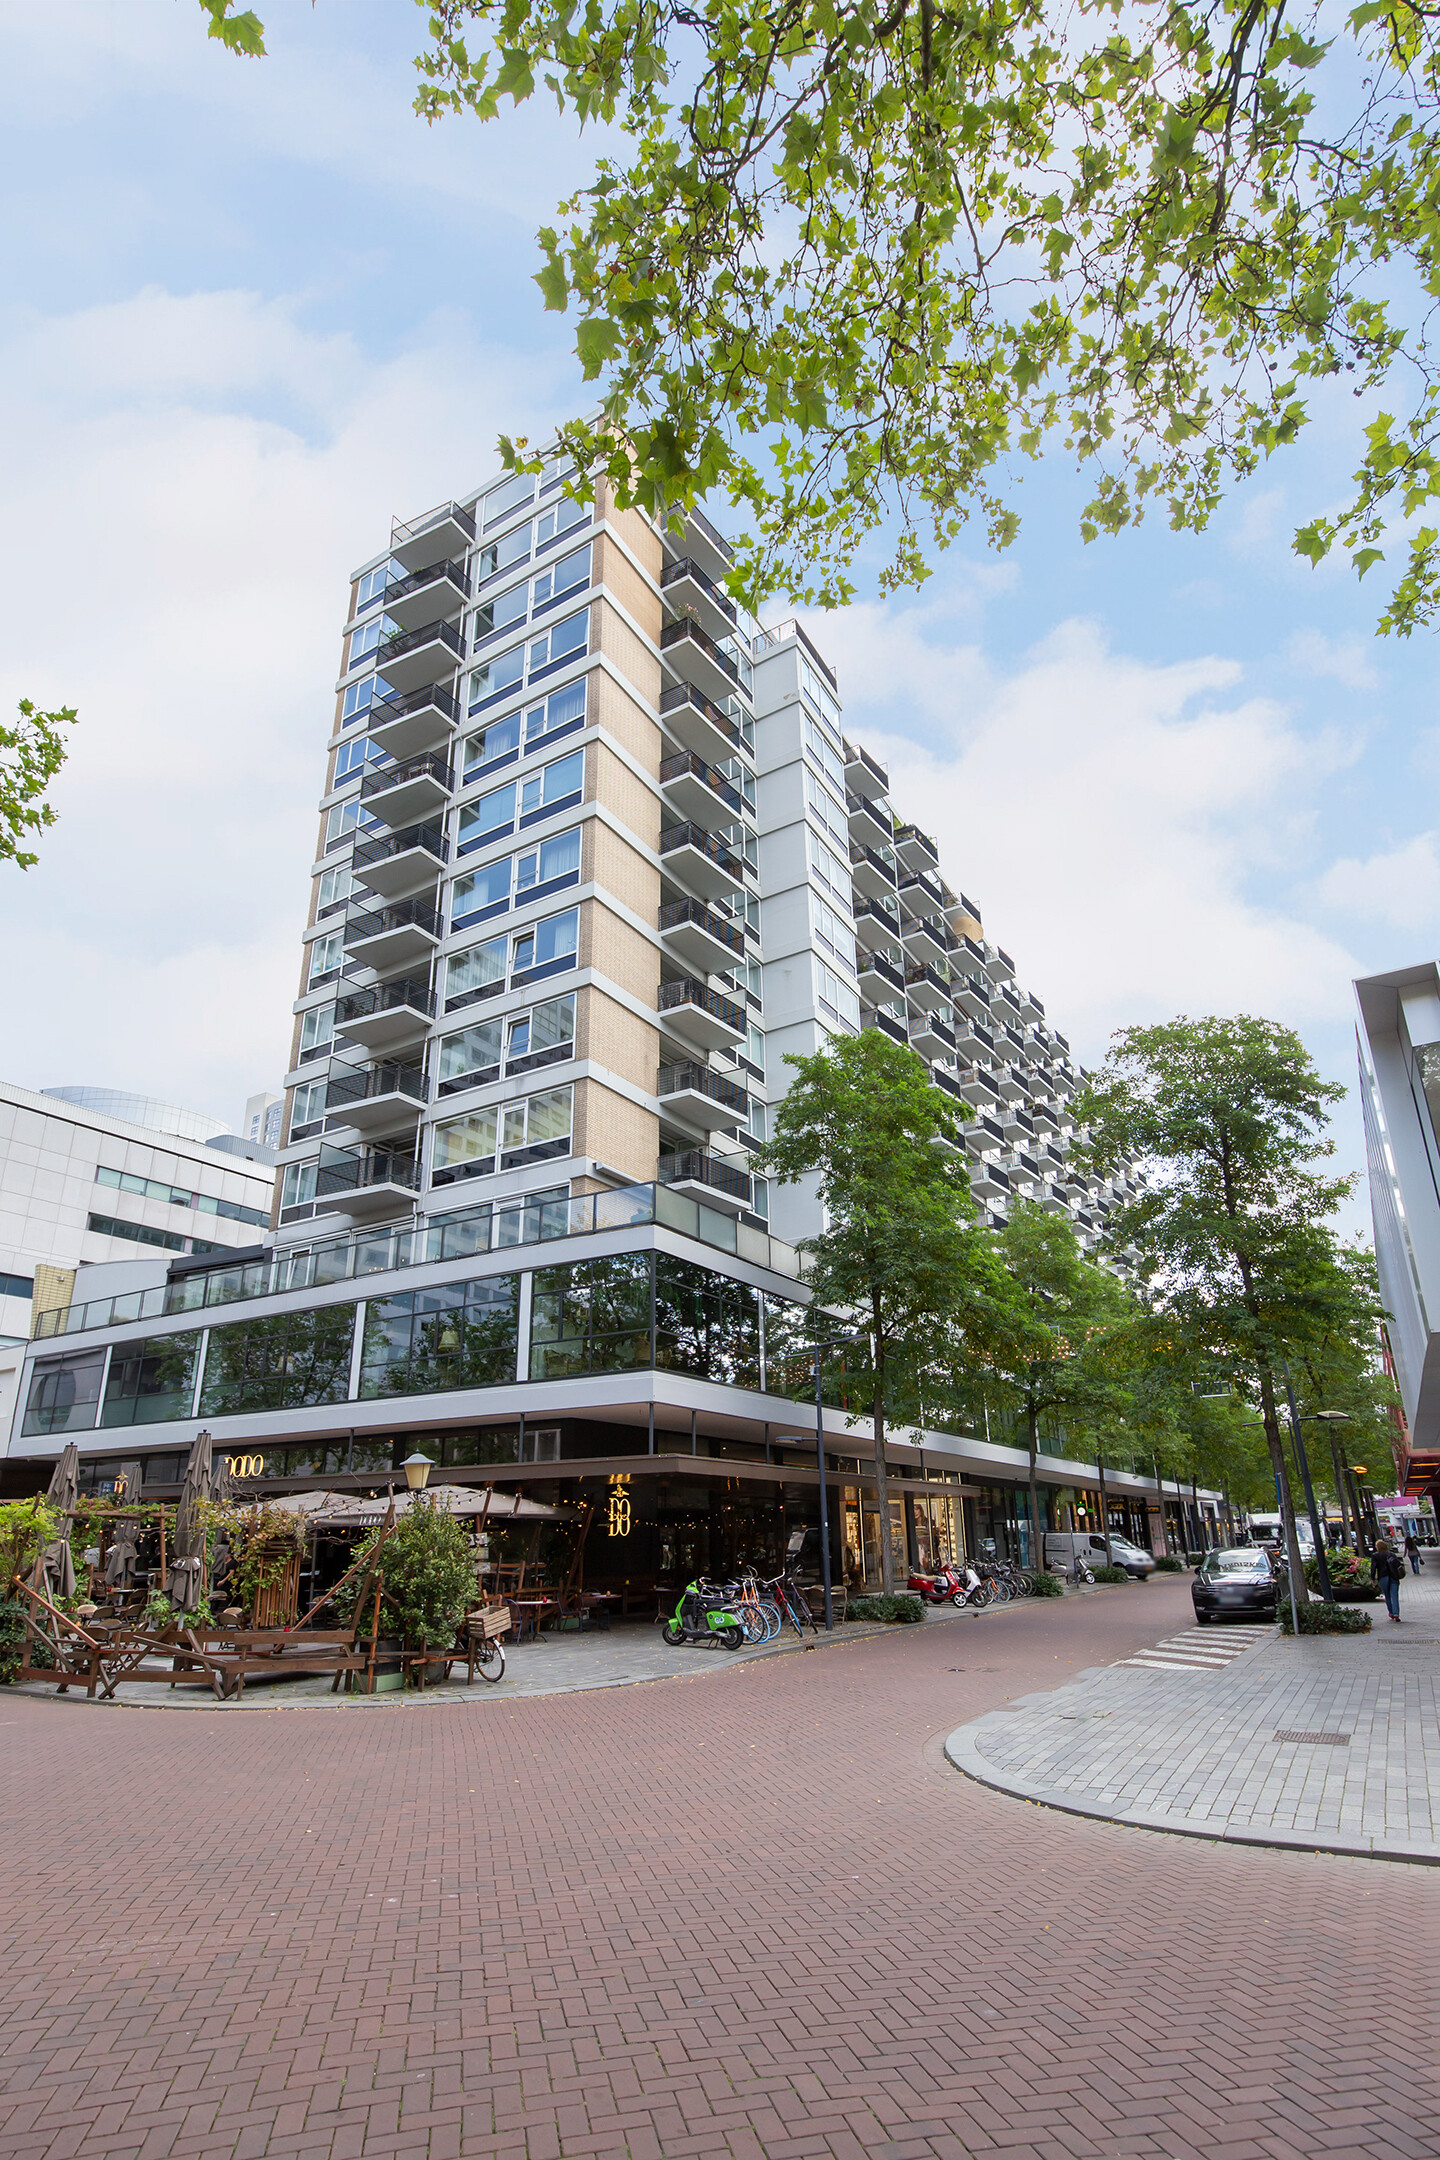 City House Kruiskade Rotterdam